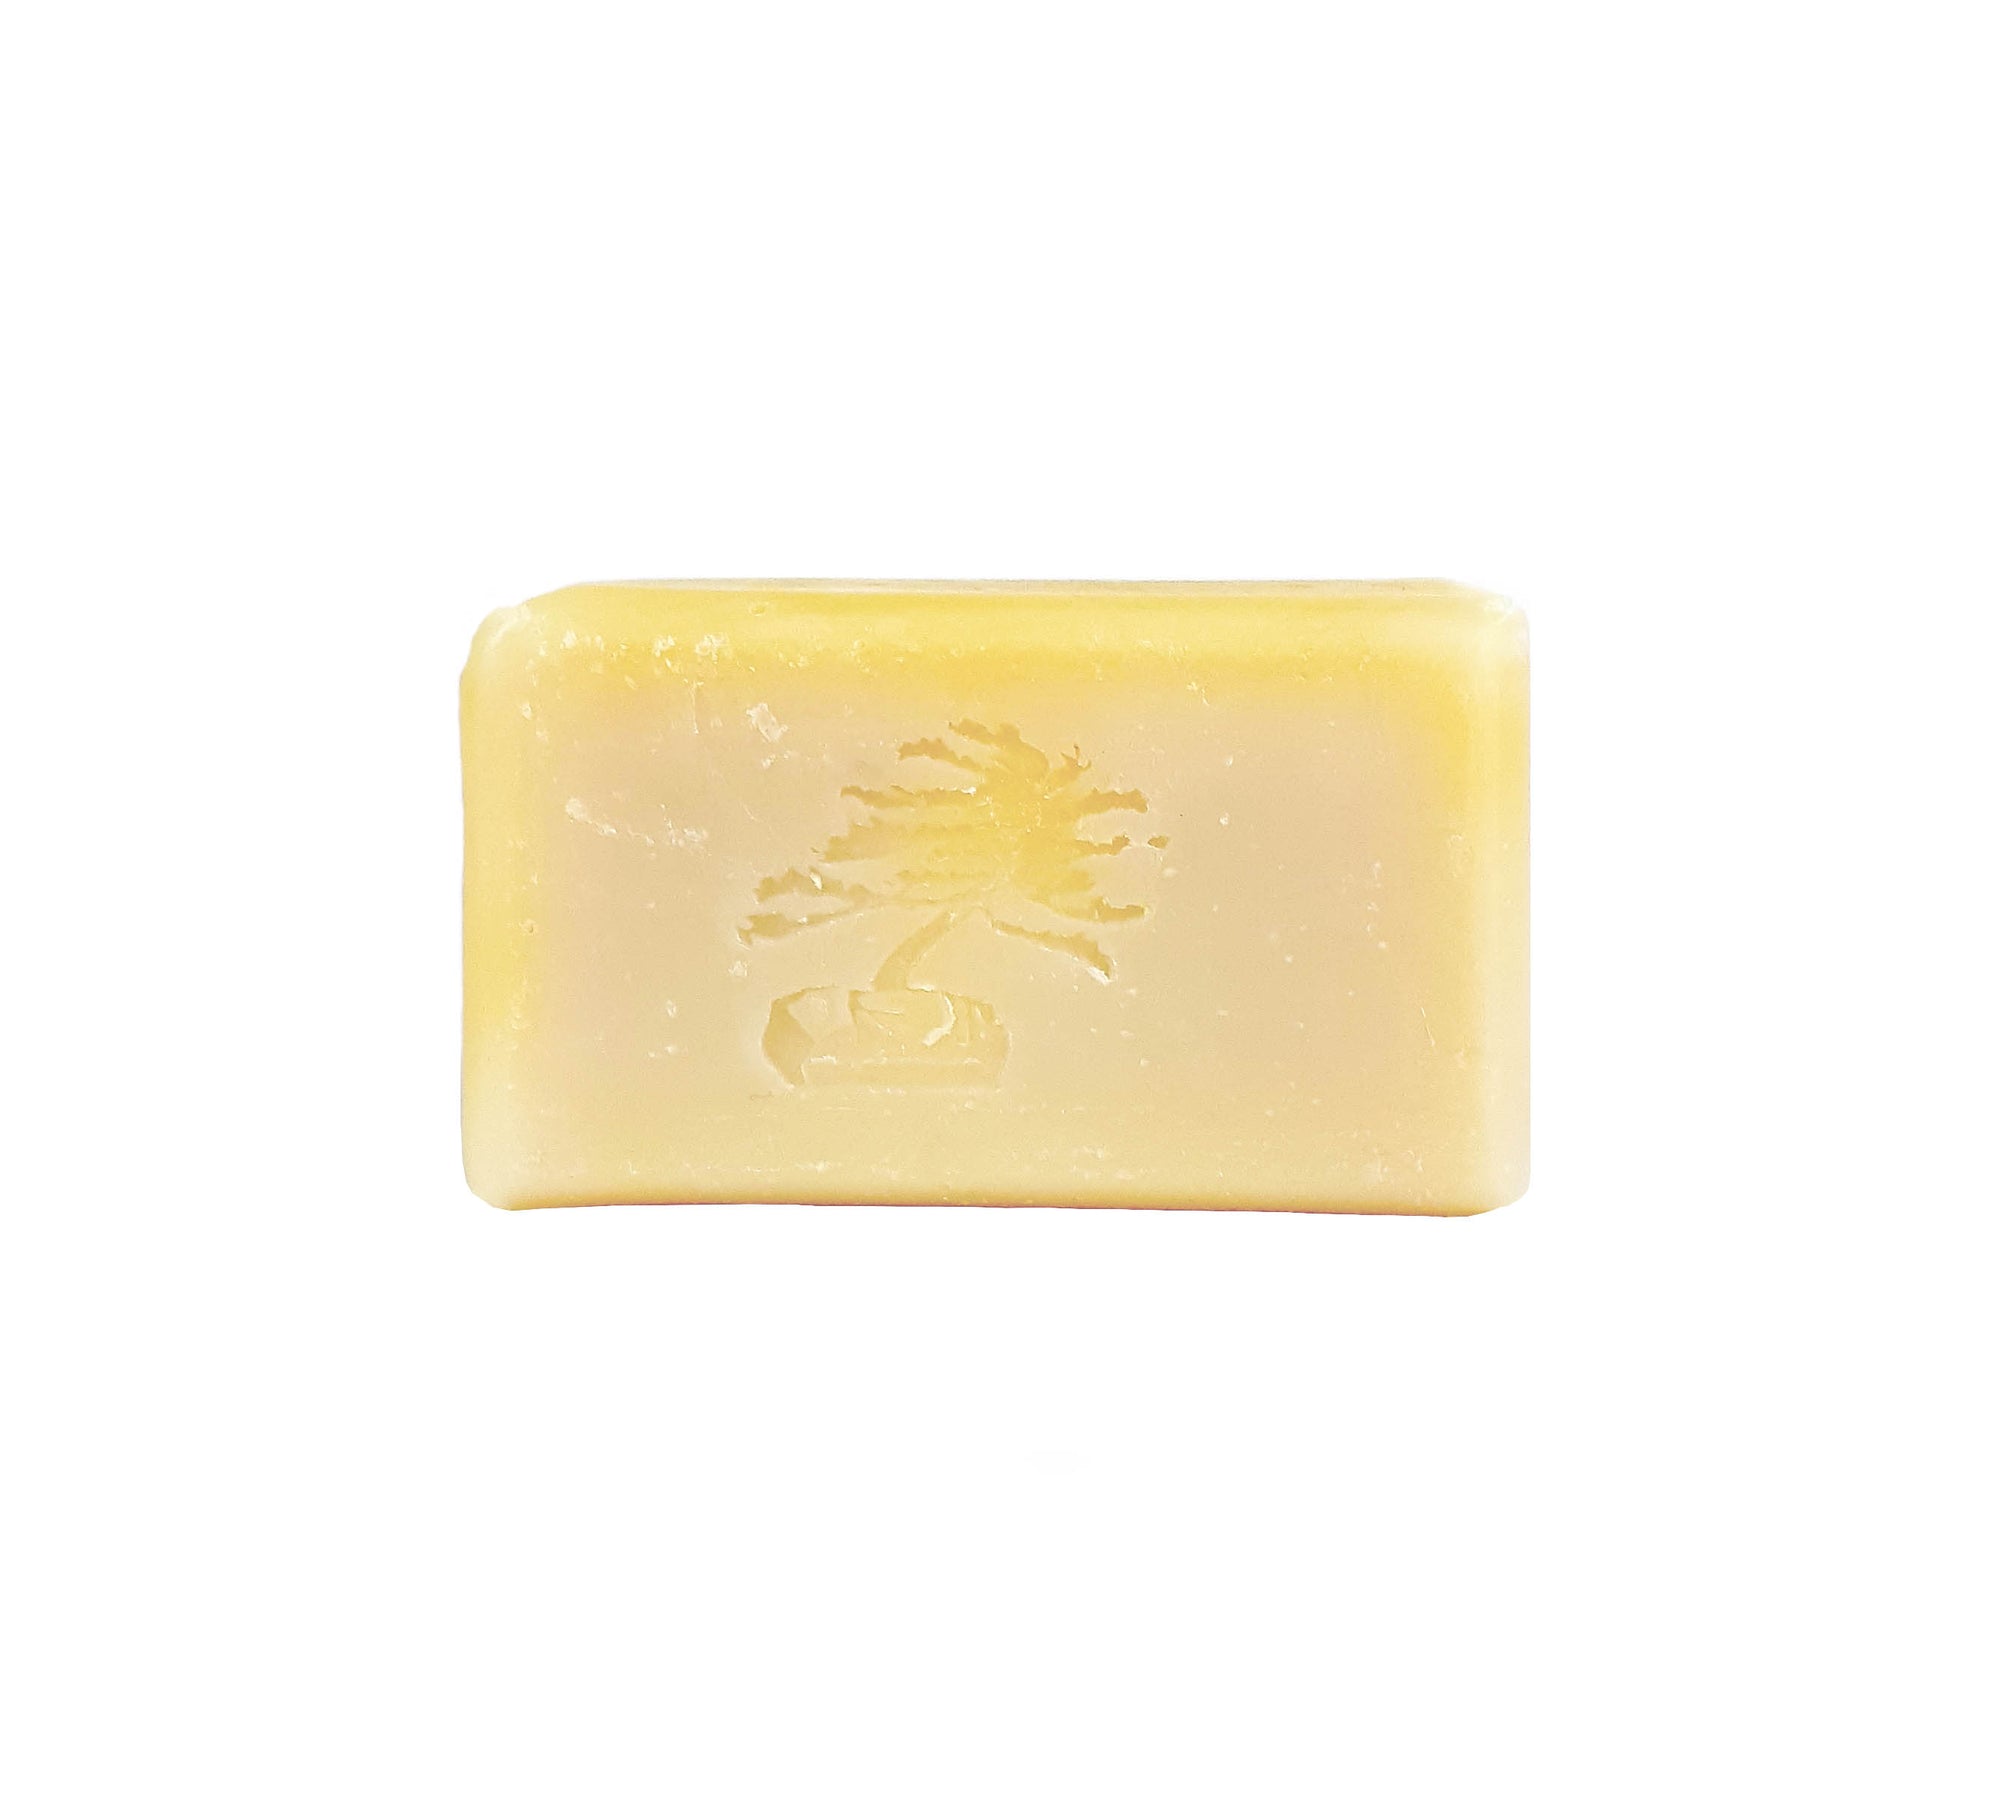 Fragrance Free Bar Soap - Soapstones Natural Skincare